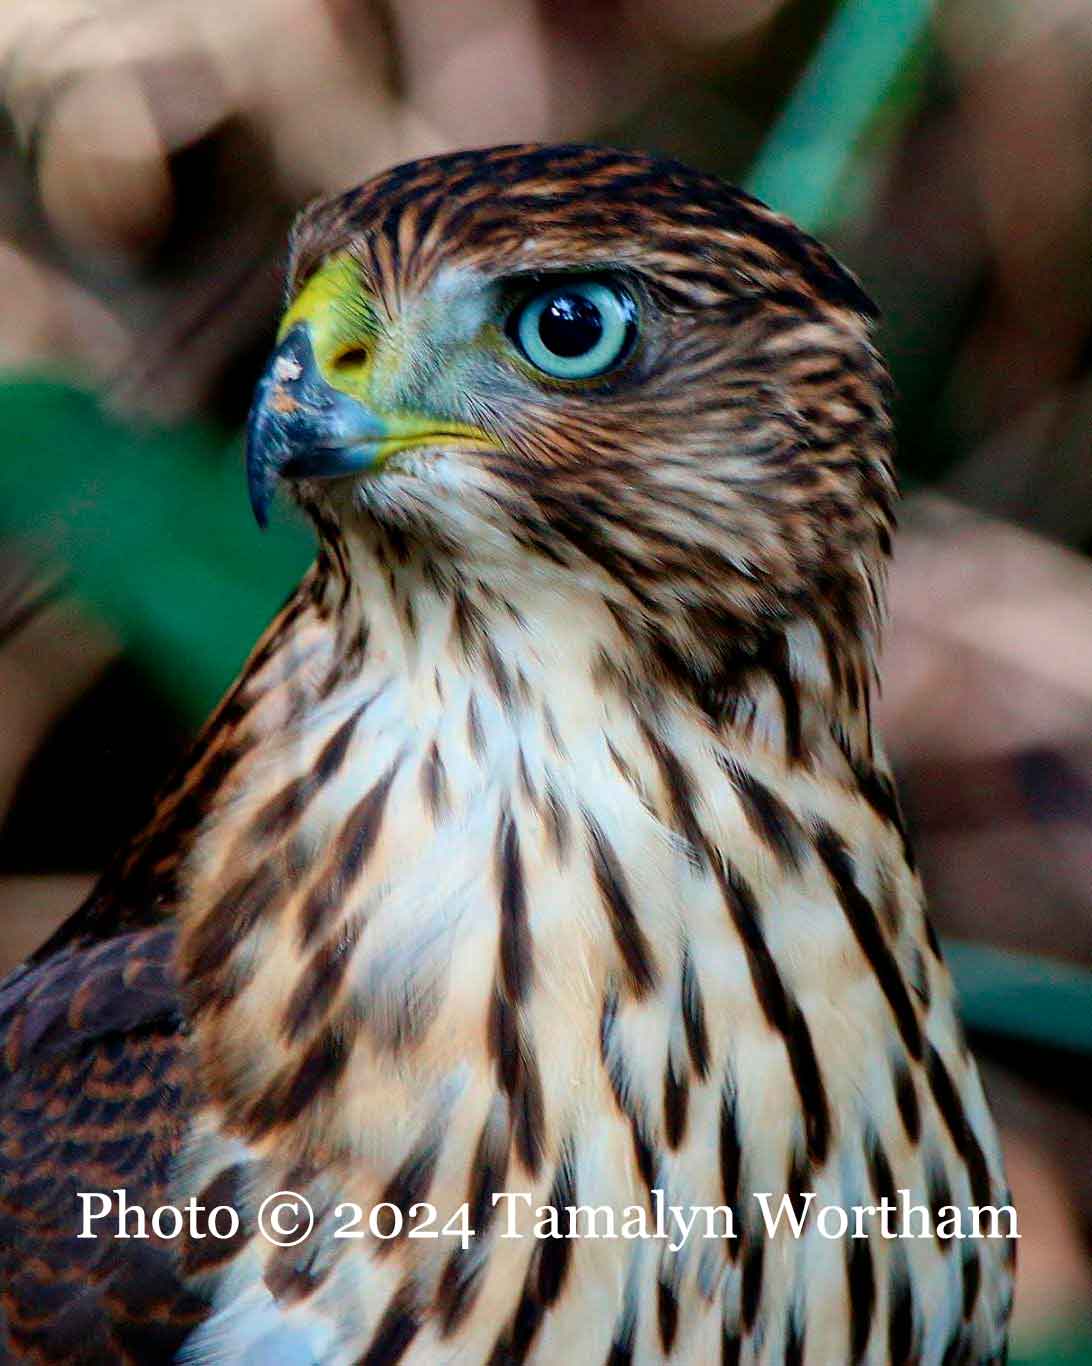 A photo of a Cooper's hawk by Tamalyn Wortham.